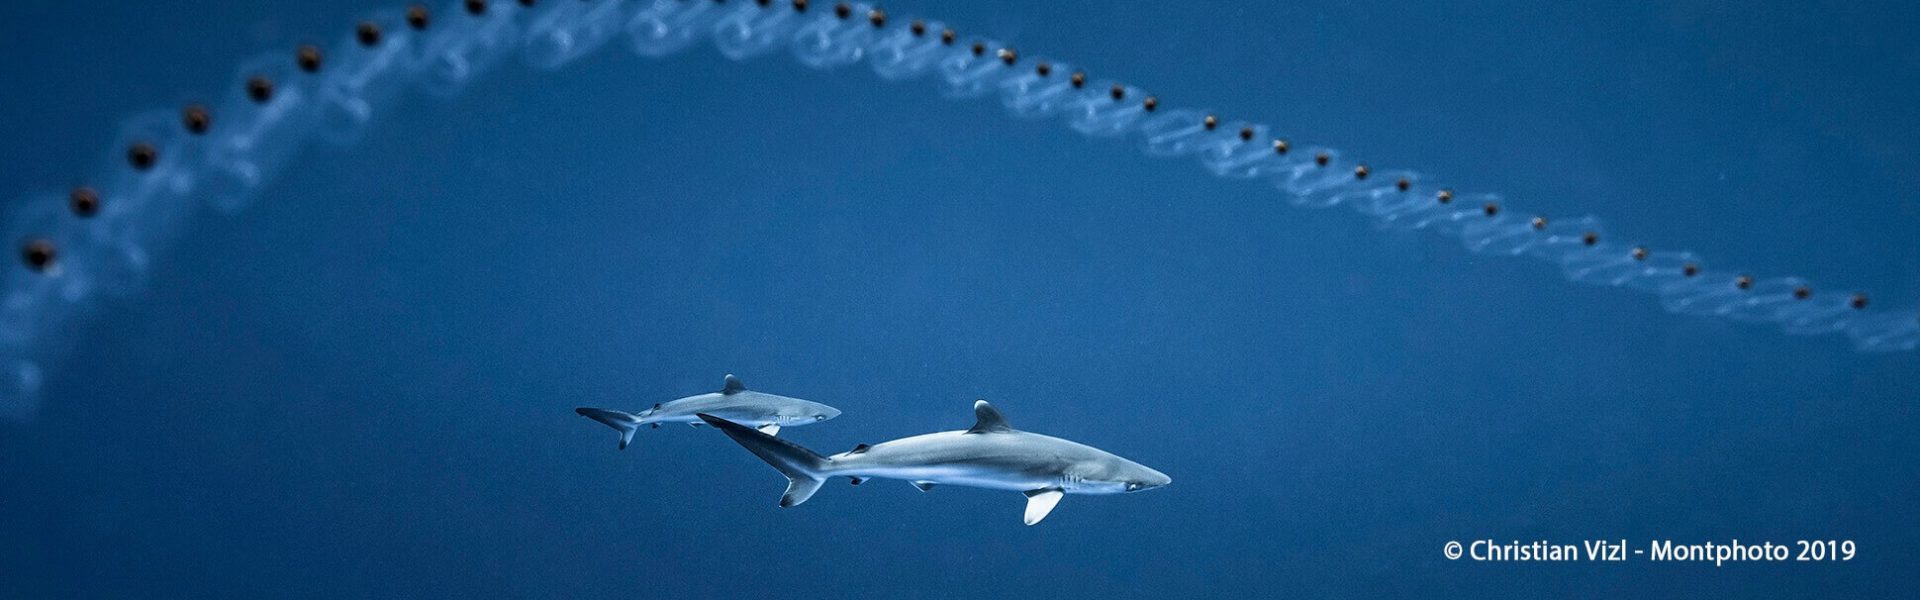 Fotografía de tiburones - Christian Vizl